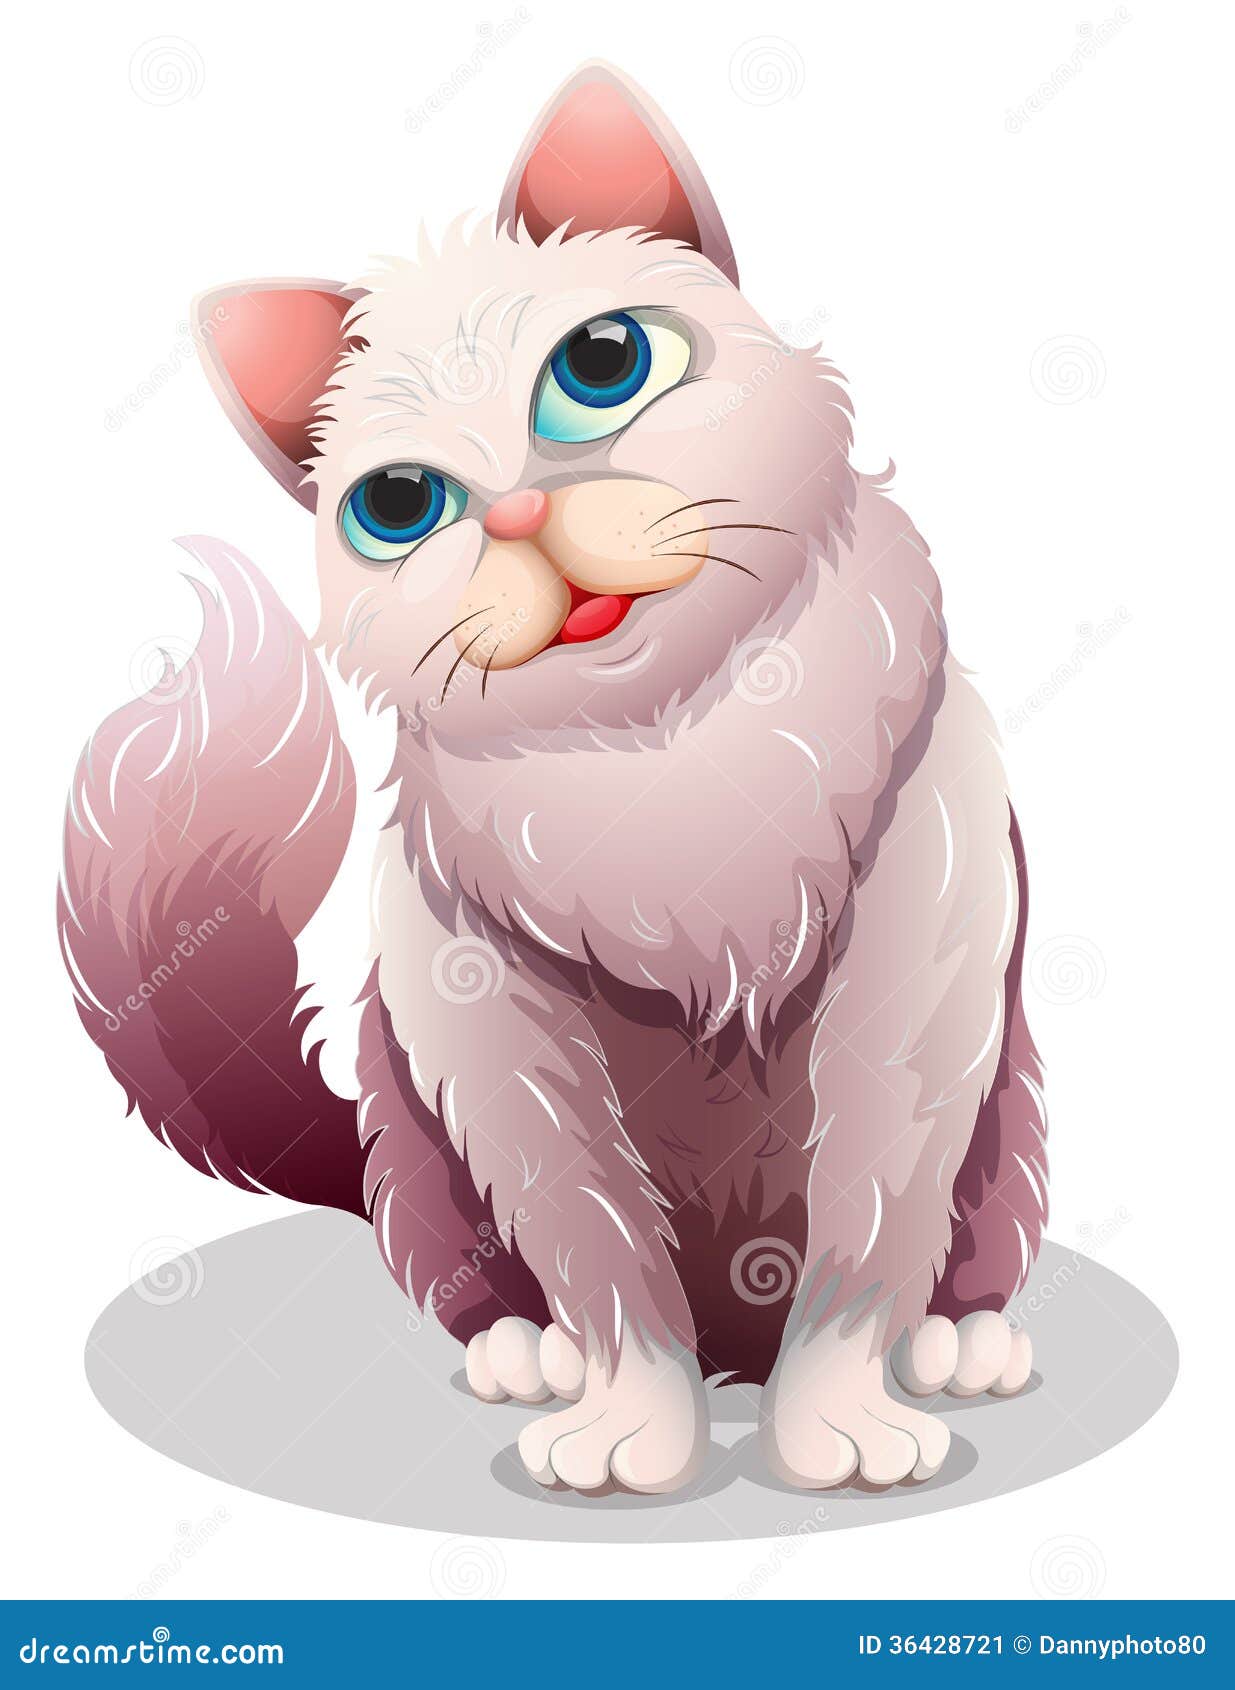 A fat cat stock illustration. Illustration of creature - 36428721